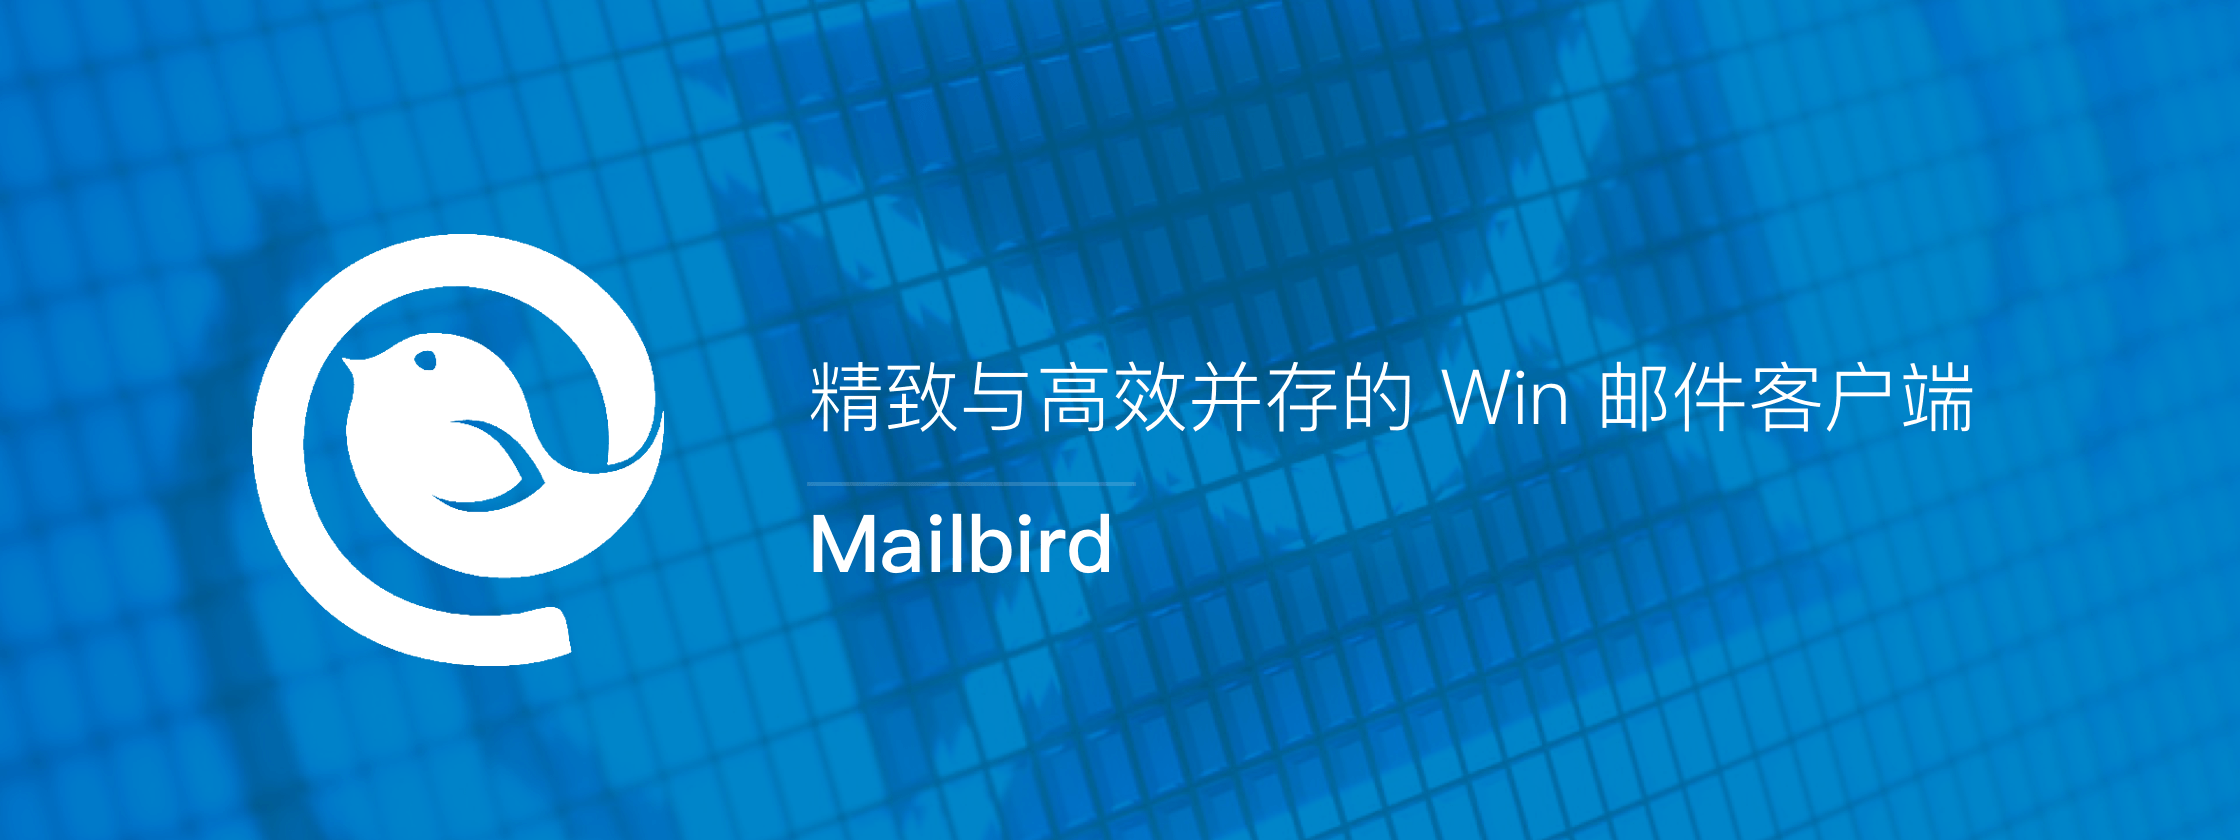 Mailbird – 精致与高效并存的 Win 邮件客户端